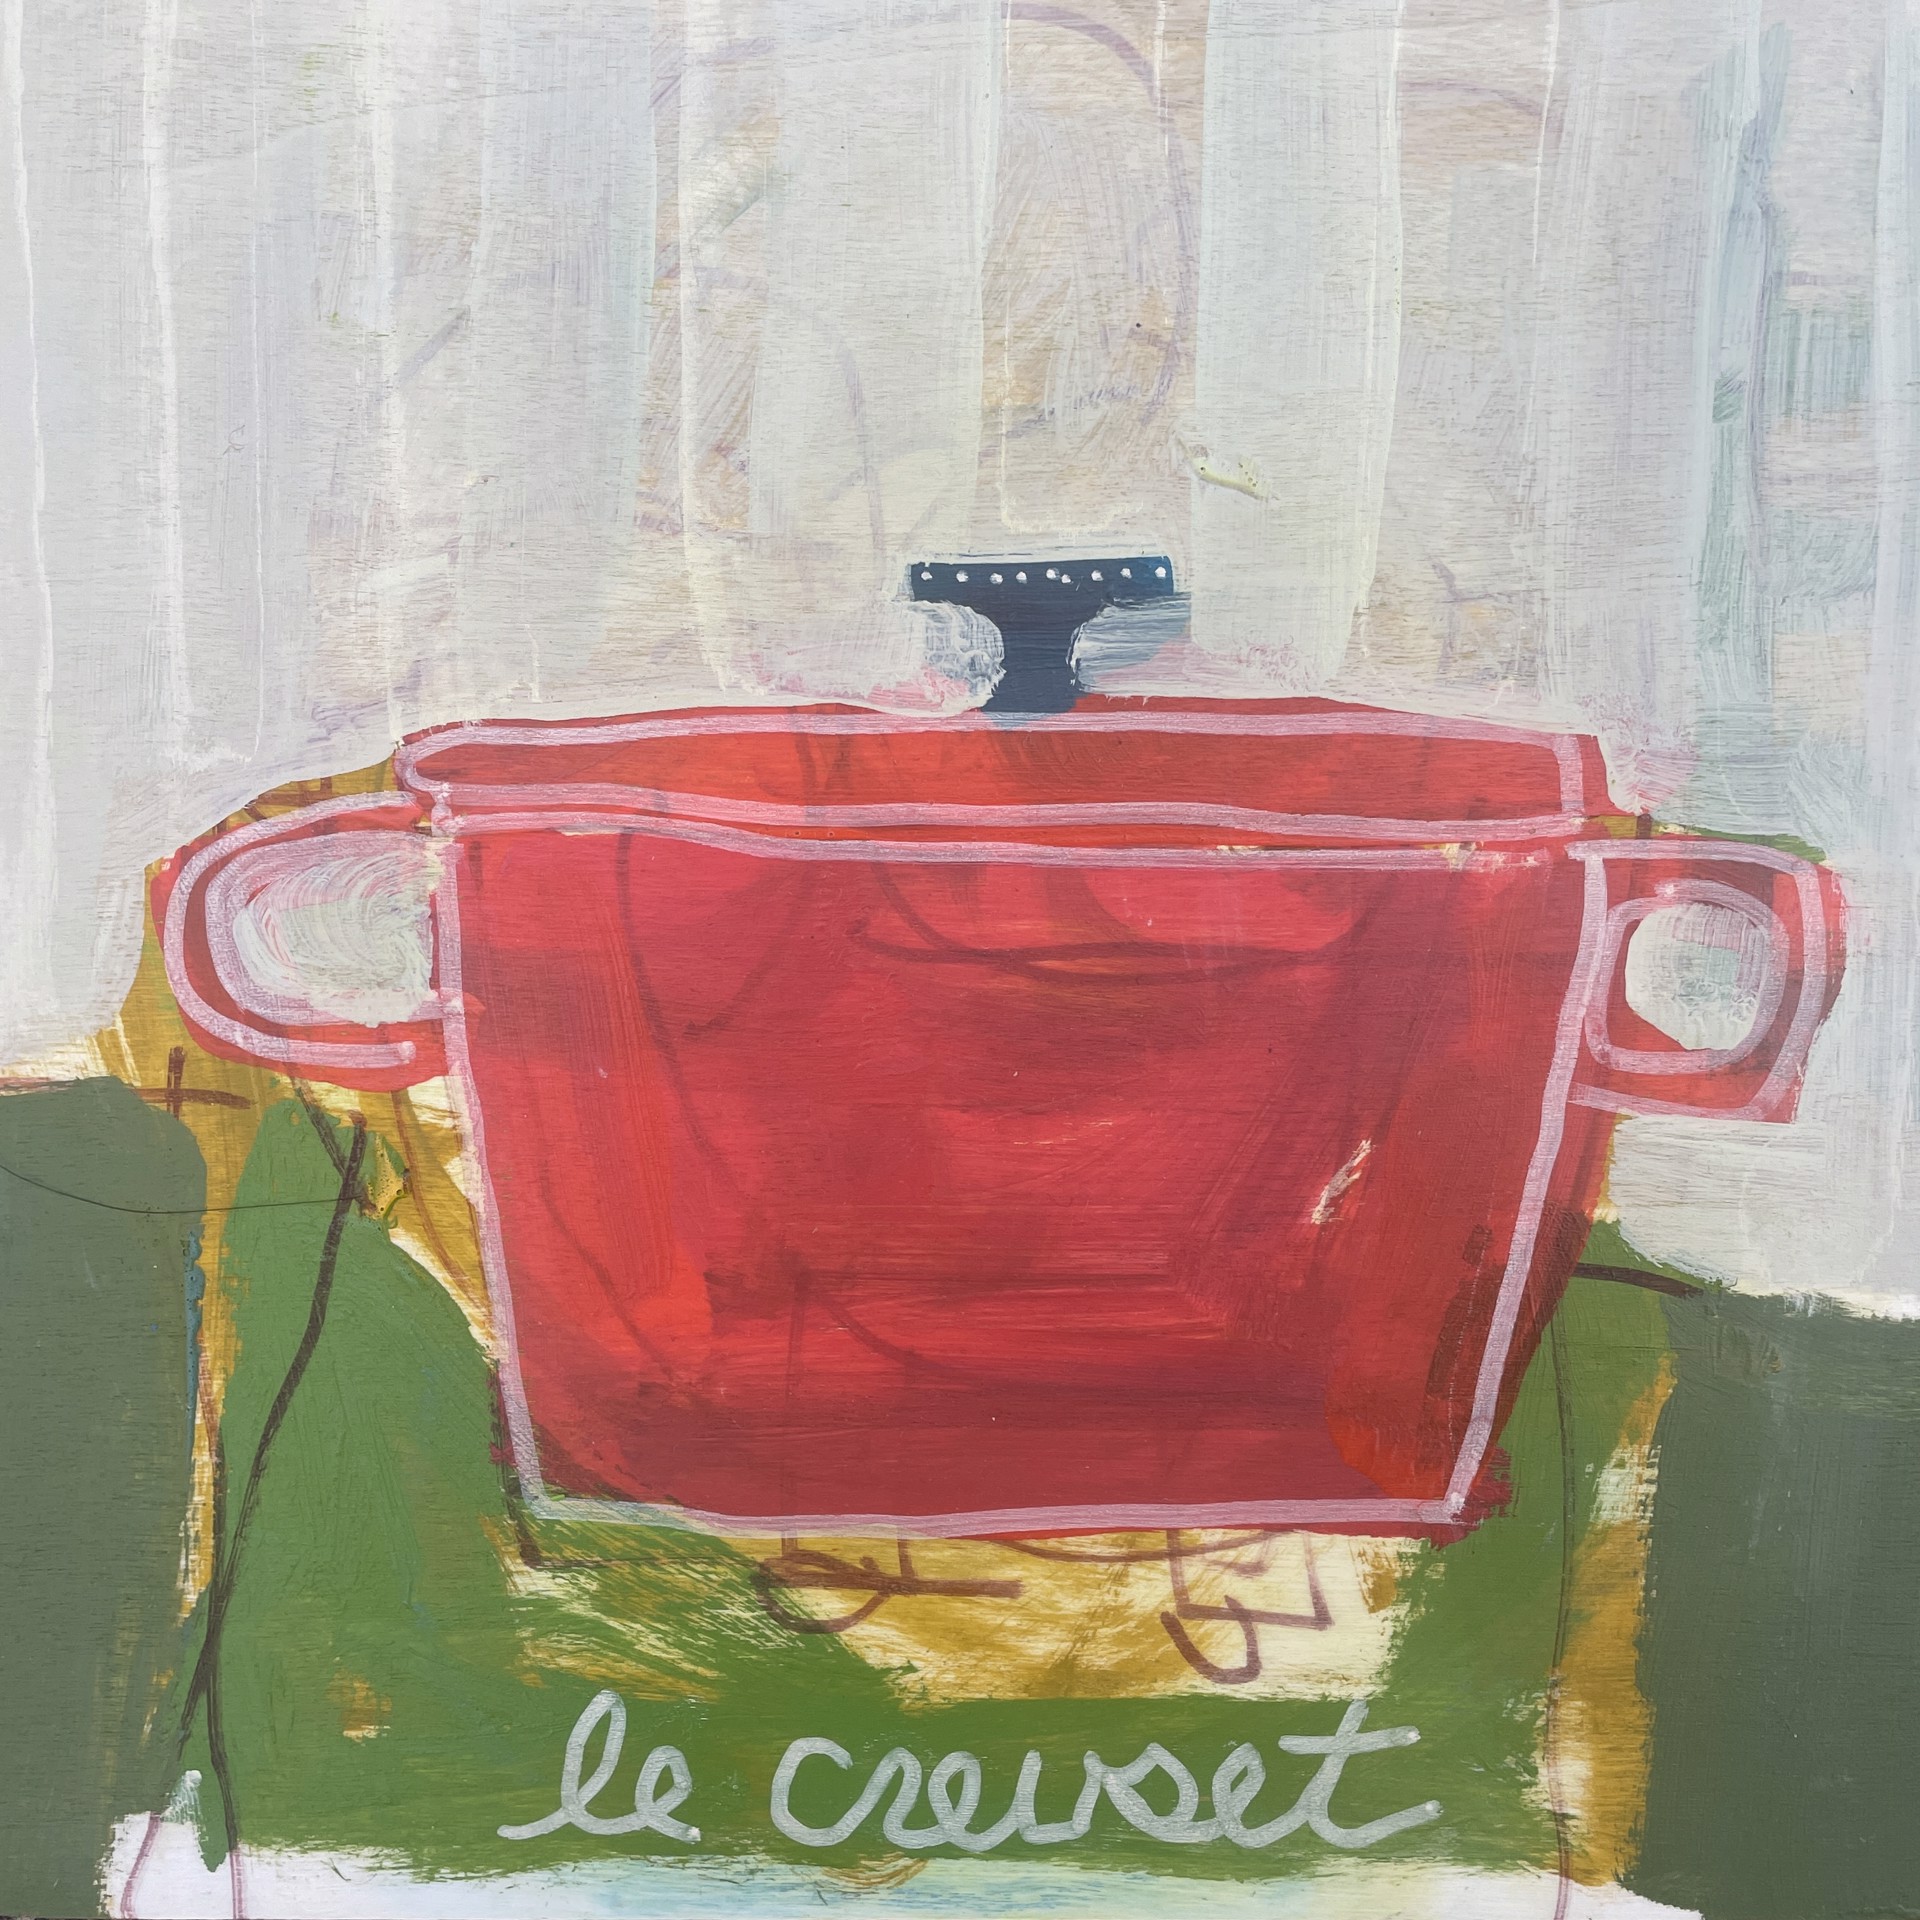 Red Le Creuset on Green Table by Rachael Van Dyke